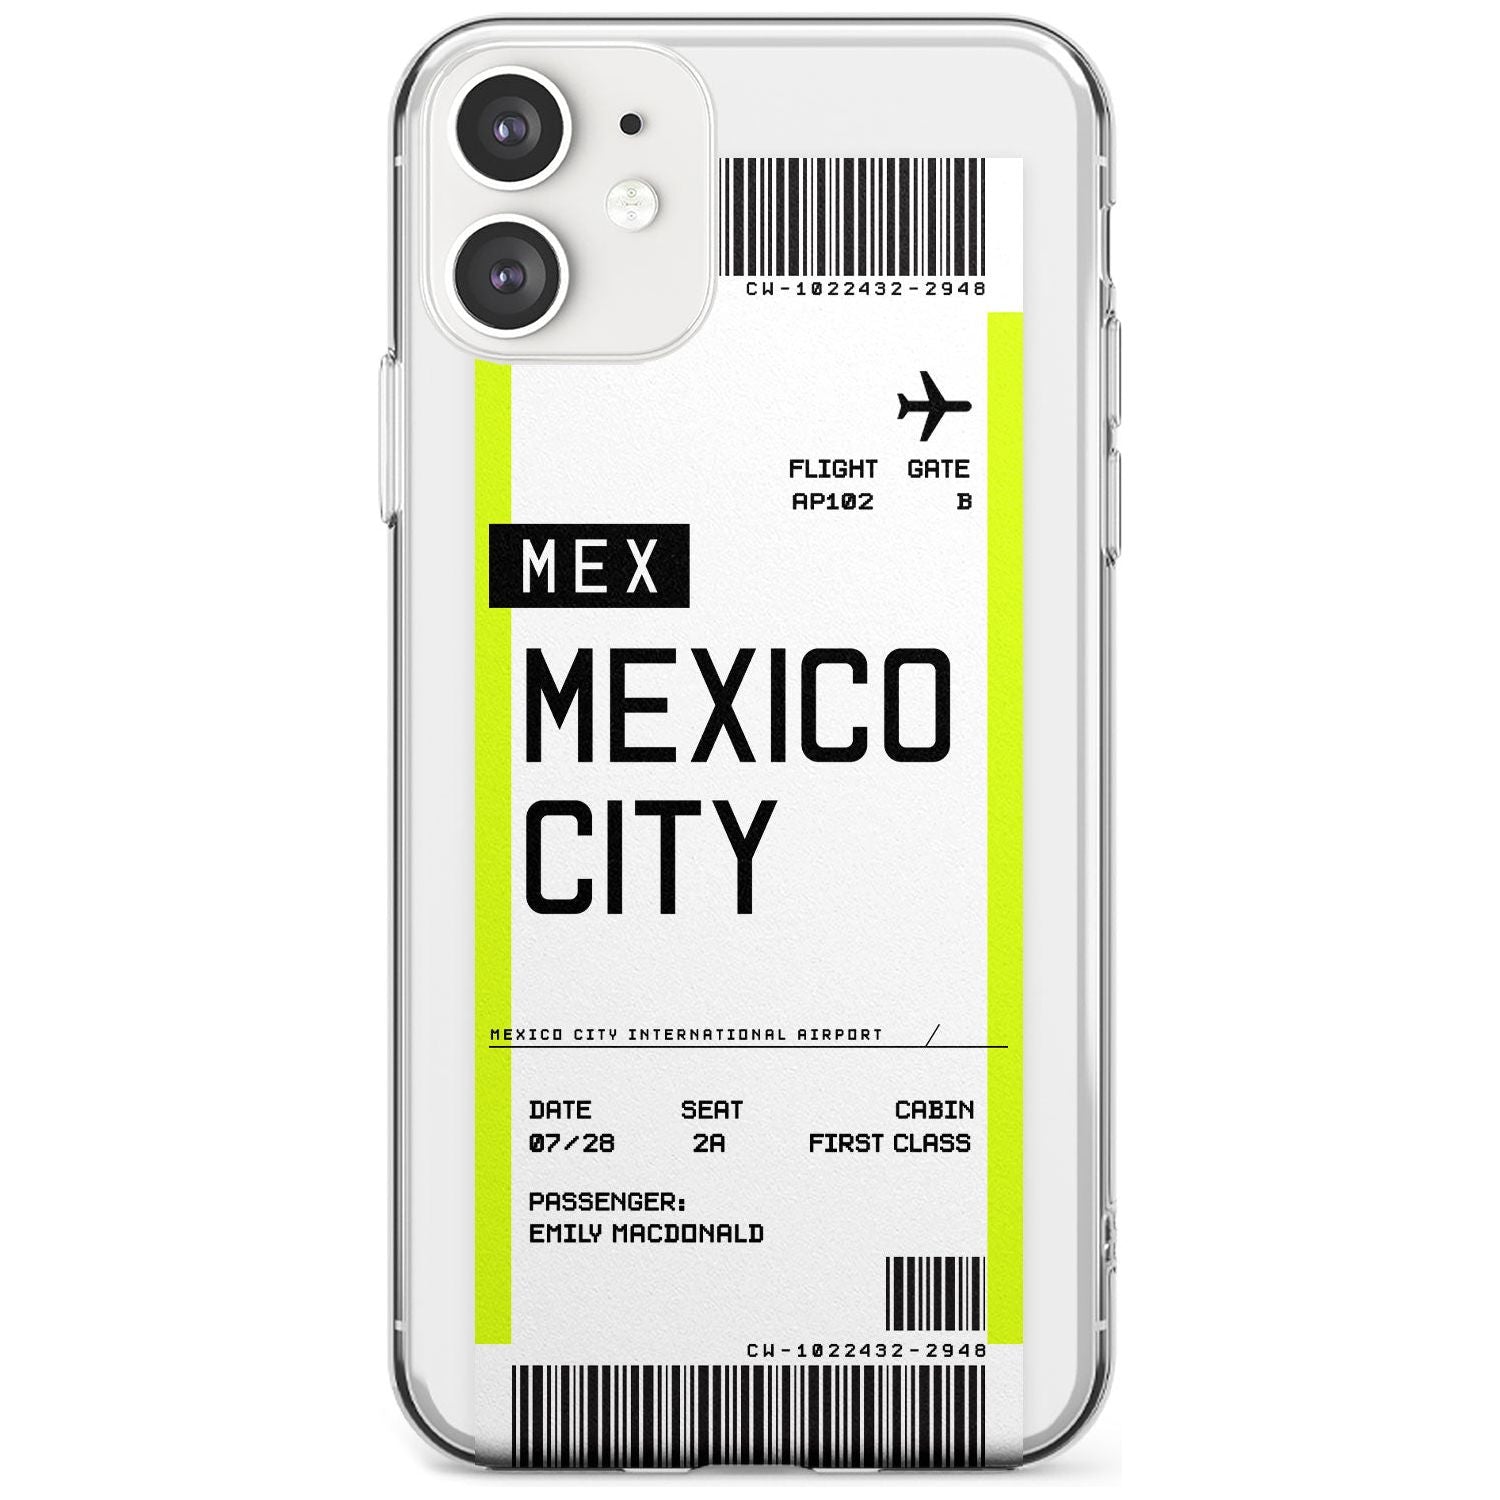 Mexico City Boarding Pass iPhone Case  Slim Case Custom Phone Case - Case Warehouse